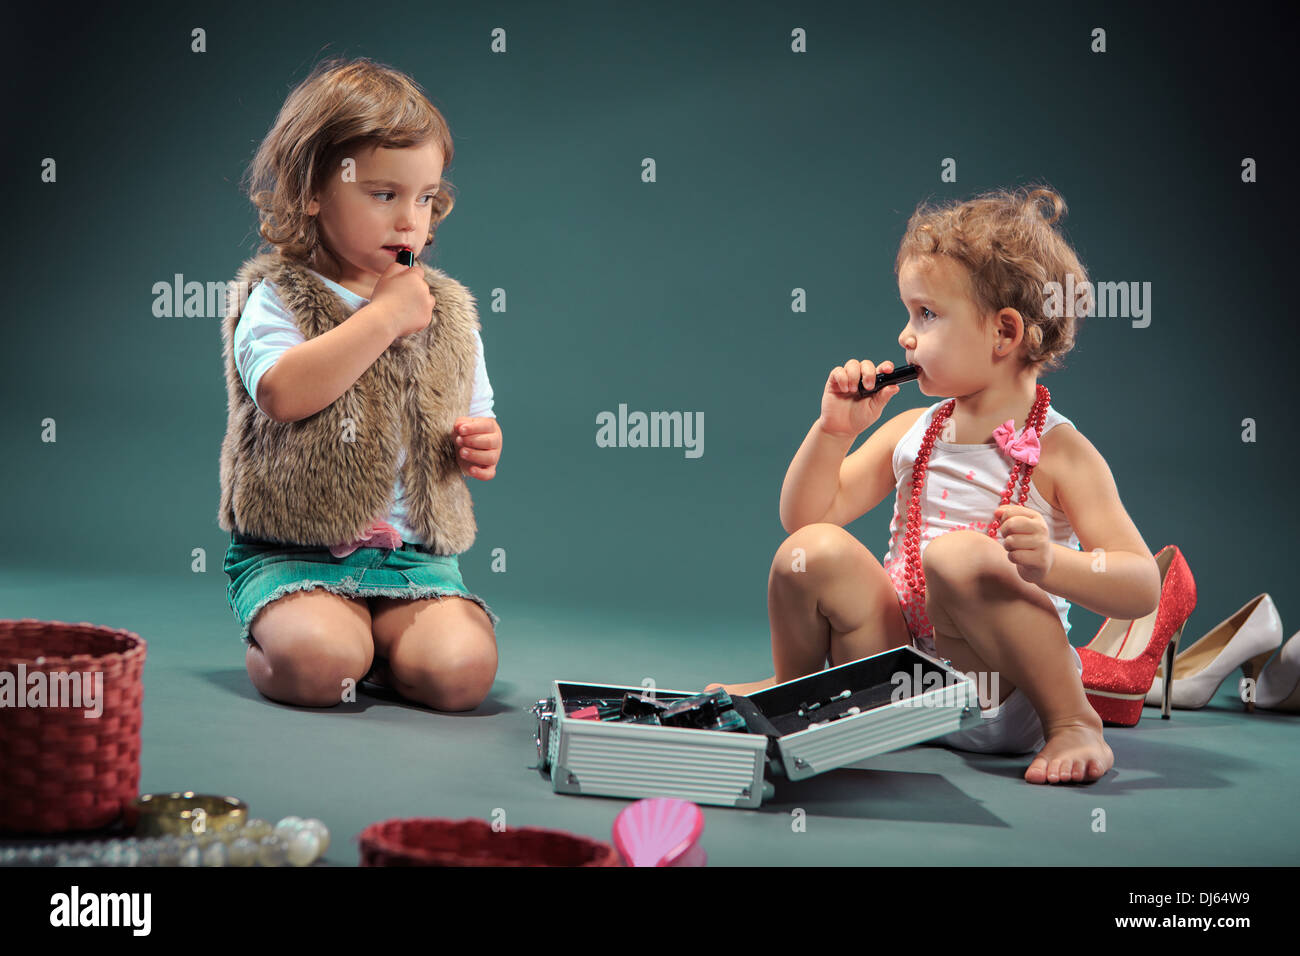 studio shot of two little girls making oneself up Stock Photo